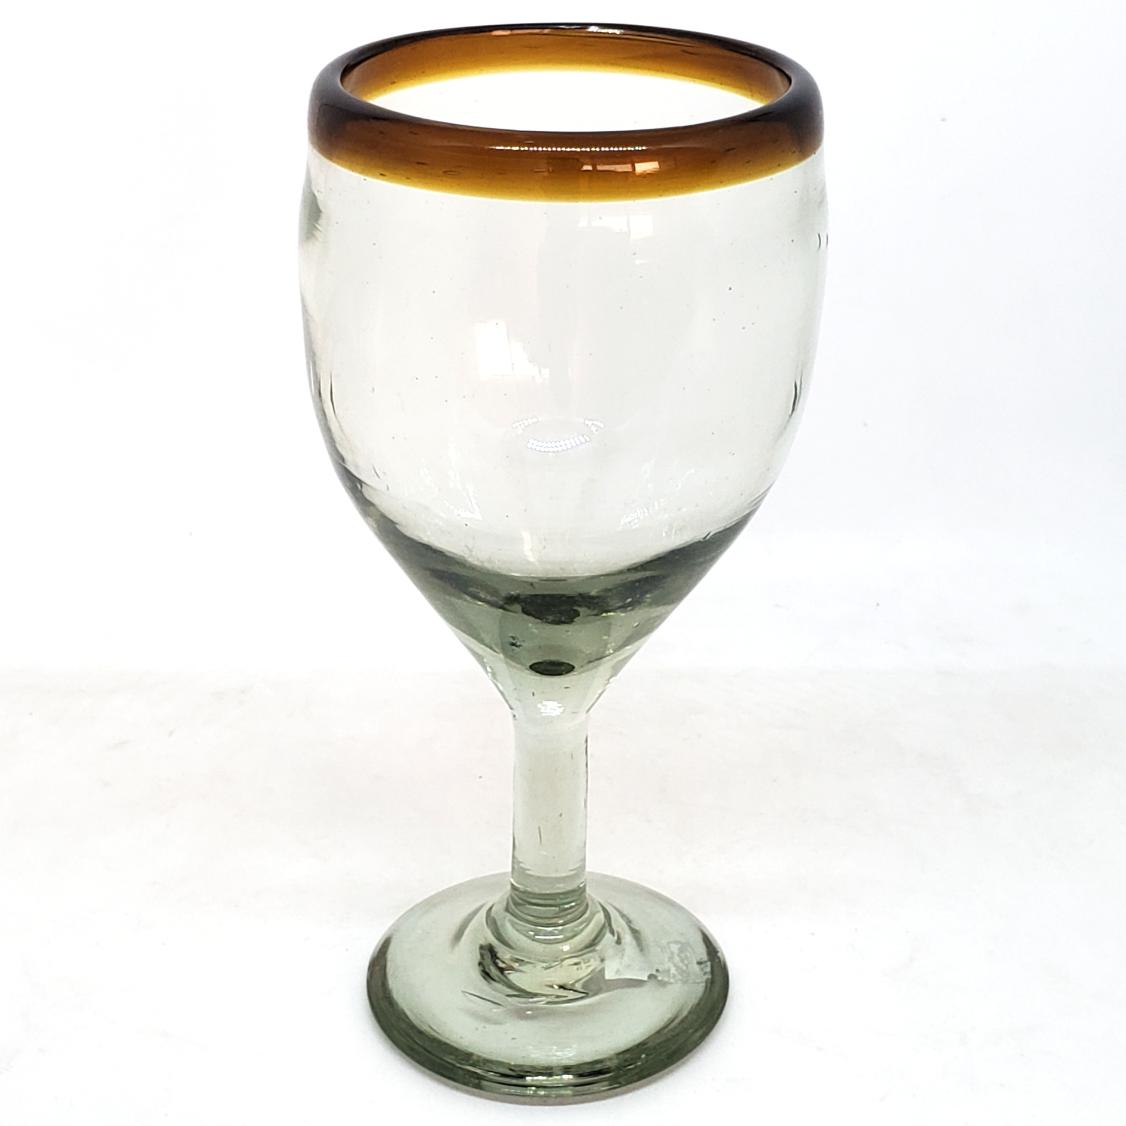 Ofertas / copas para vino con borde ambar / Capture el aroma de un fino vino tinto con éstas copas decoradas con un borde ambar.